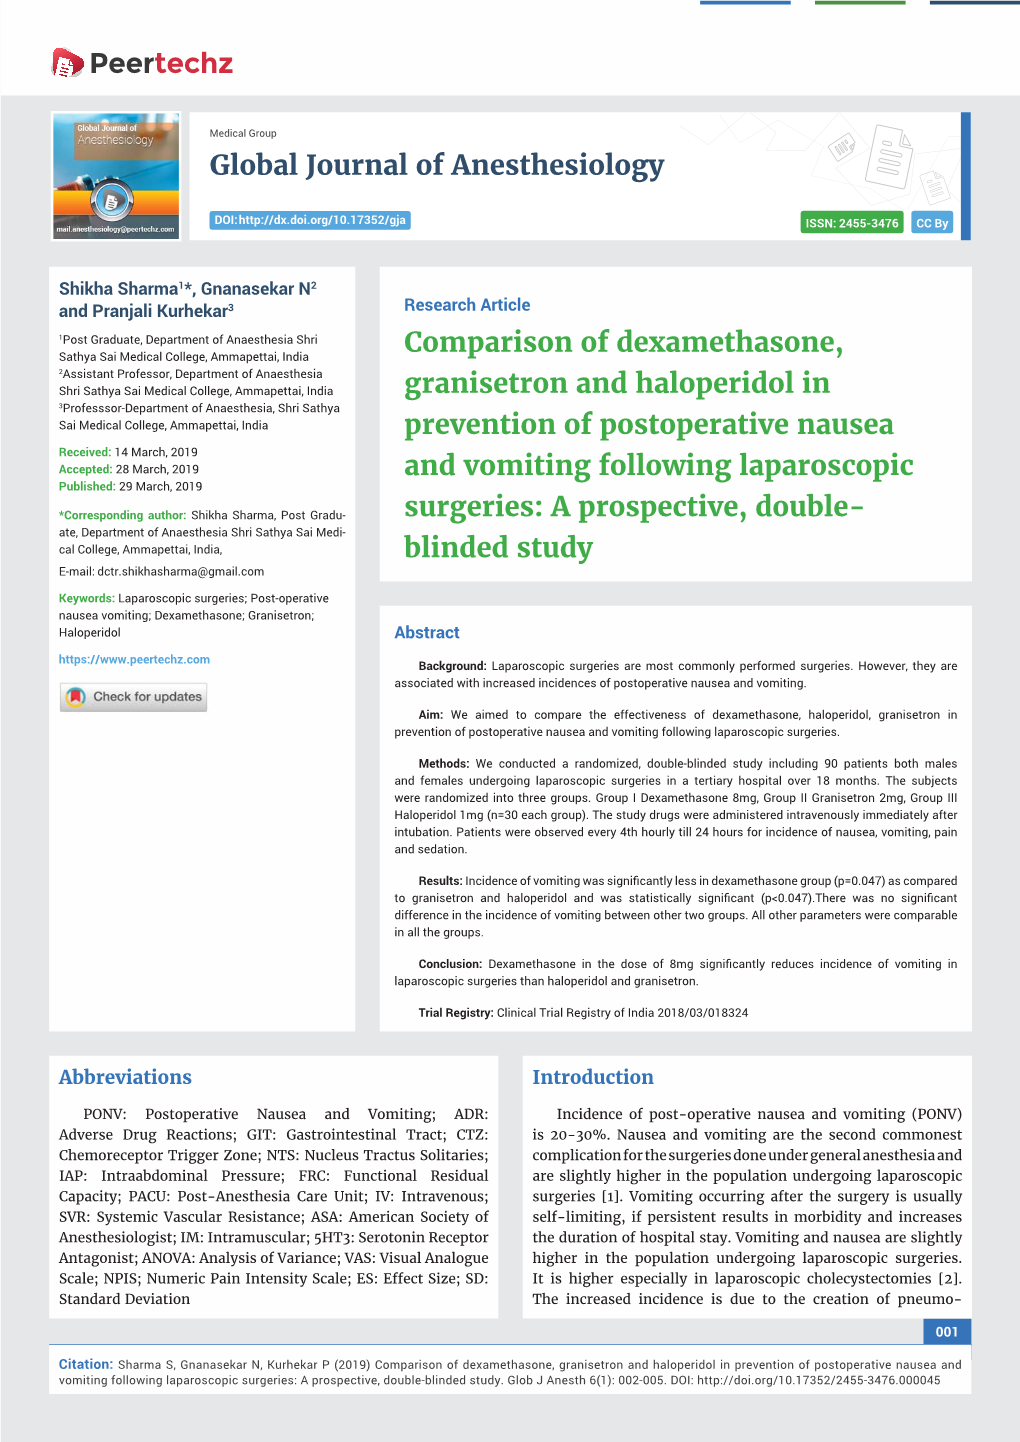 Comparison of Dexamethasone, Granisetron and Haloperidol In